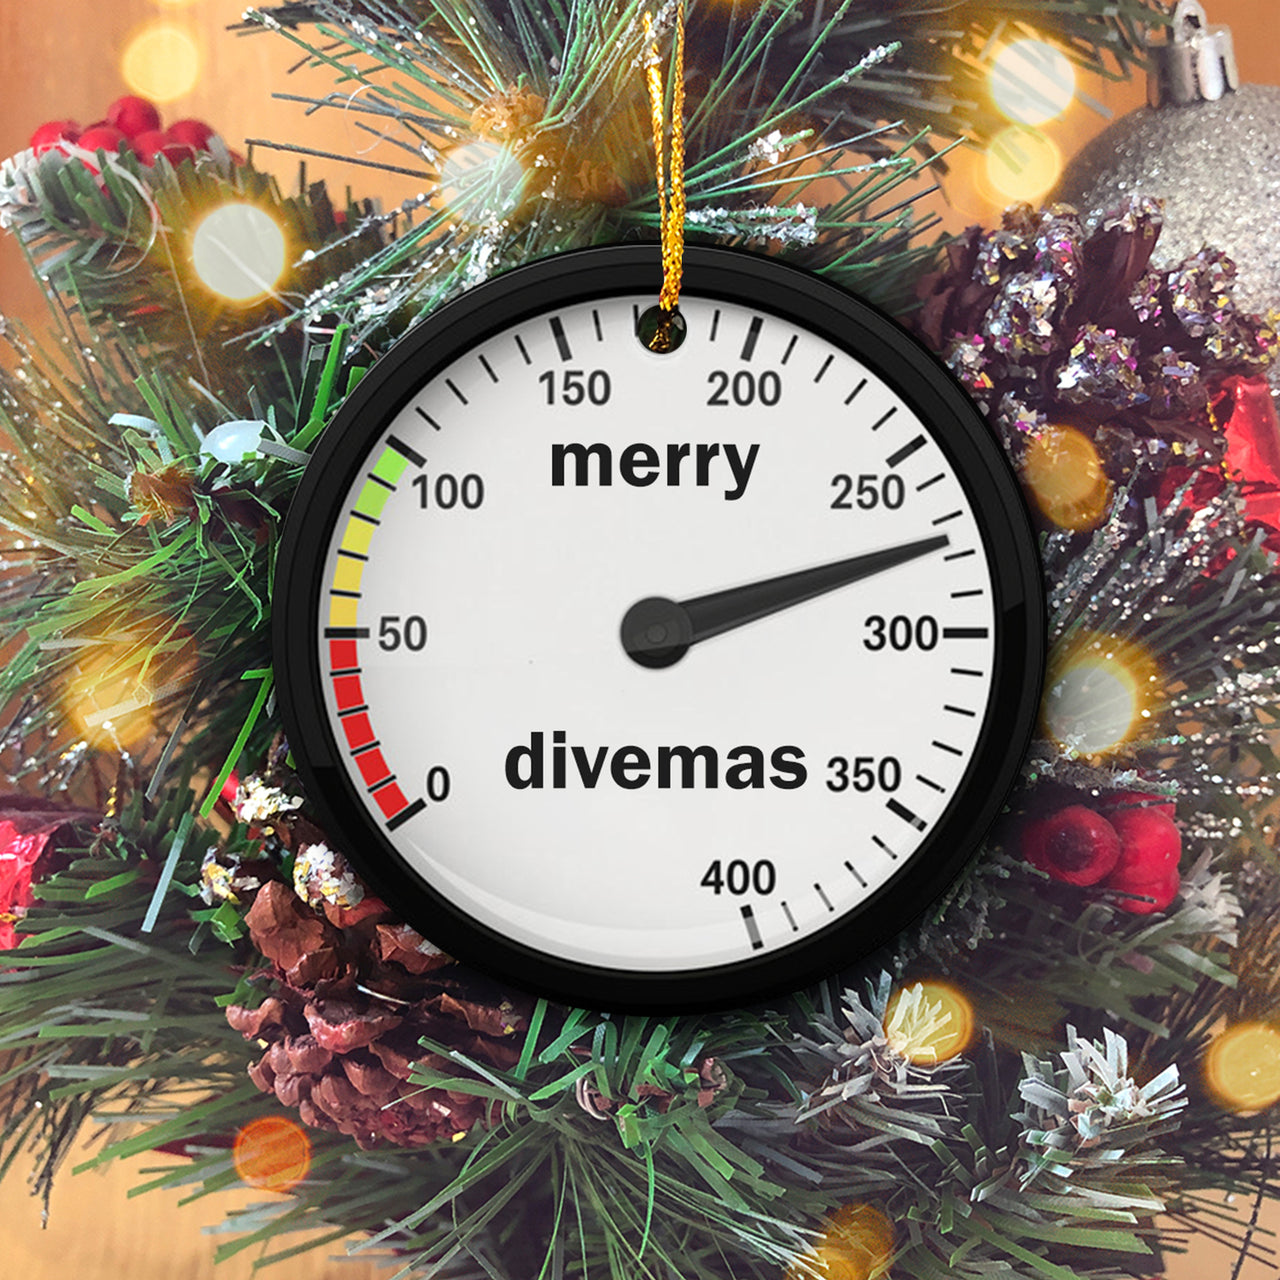 Diving Merry Divemas Personalized Christmas Premium Ceramic Ornaments Sets for Christmas Tree